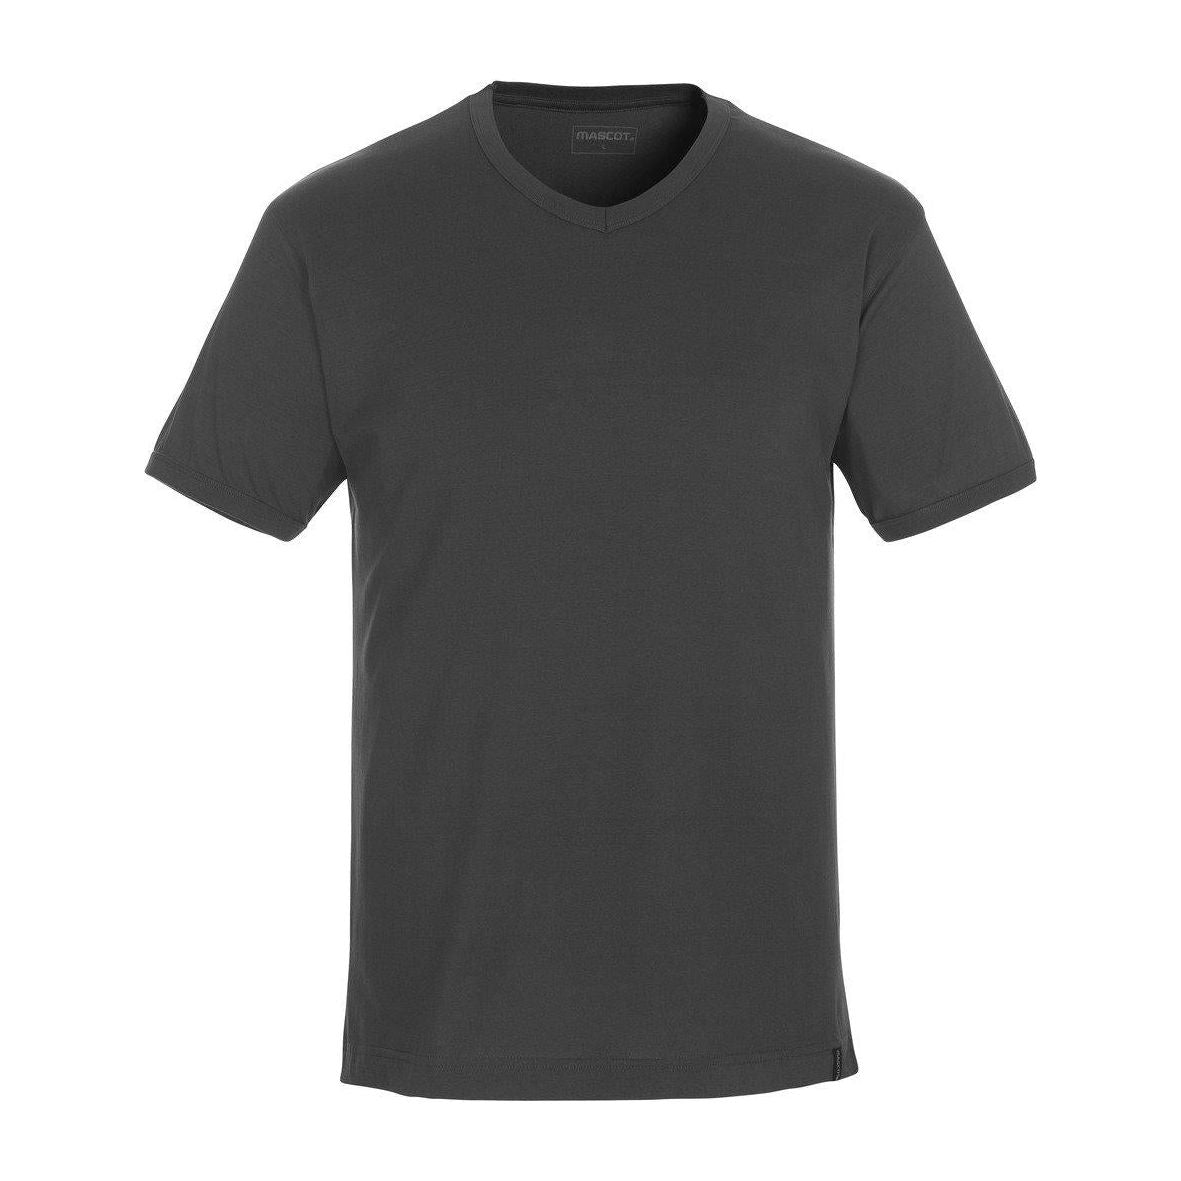 Mascot Algoso T-shirt V-Neck Dark Anthracite Grey 50415-250-18 Front